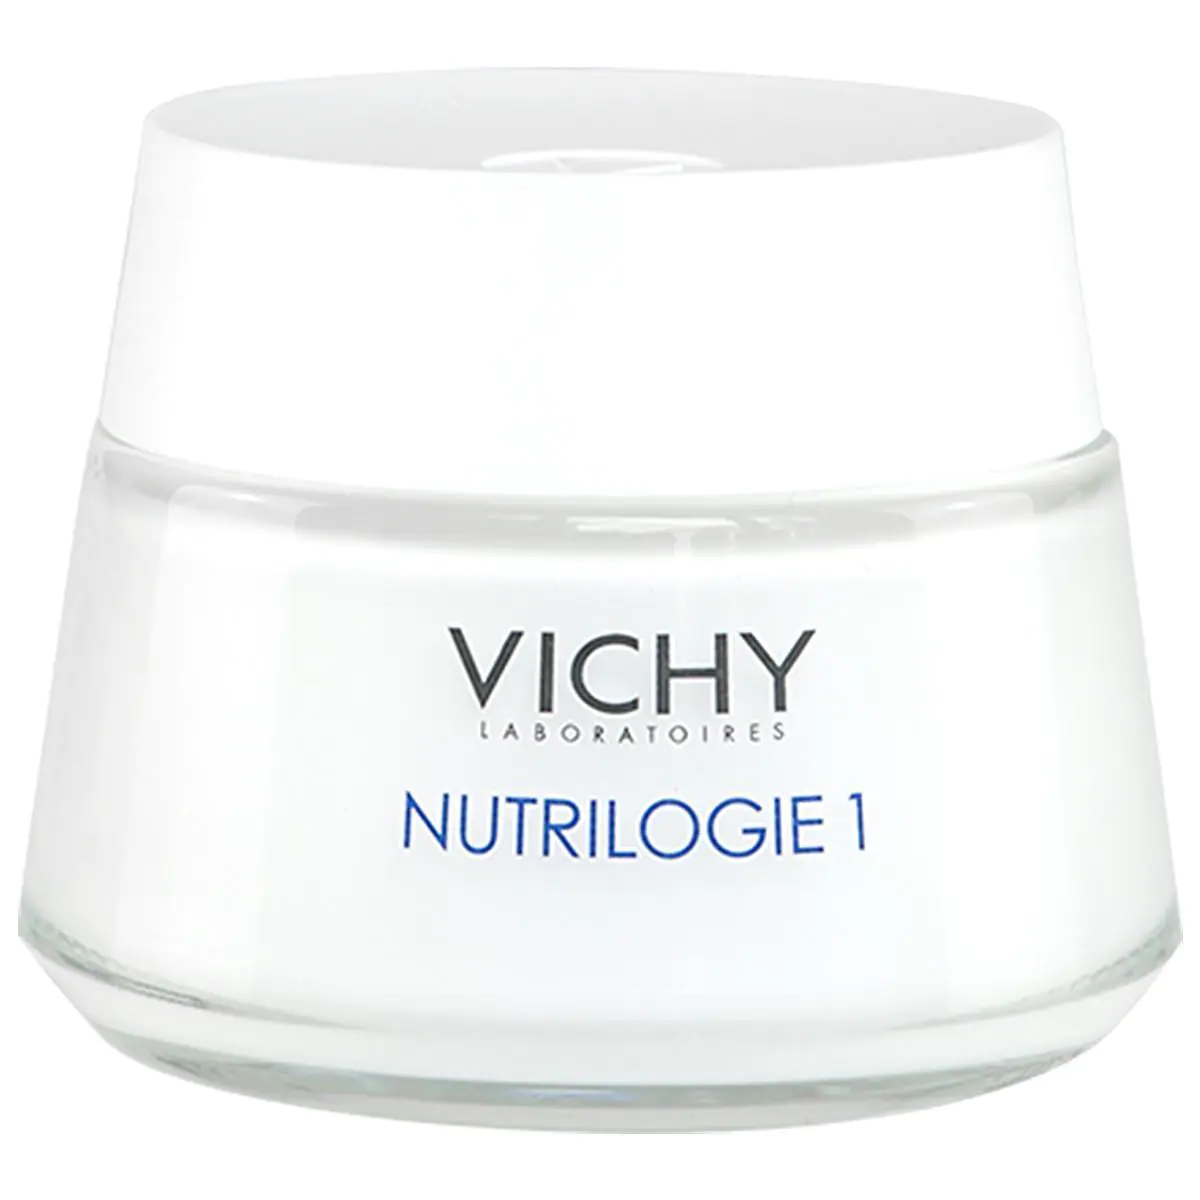 VICHY Nutrilogie NUTRILOGIE 1 Cream